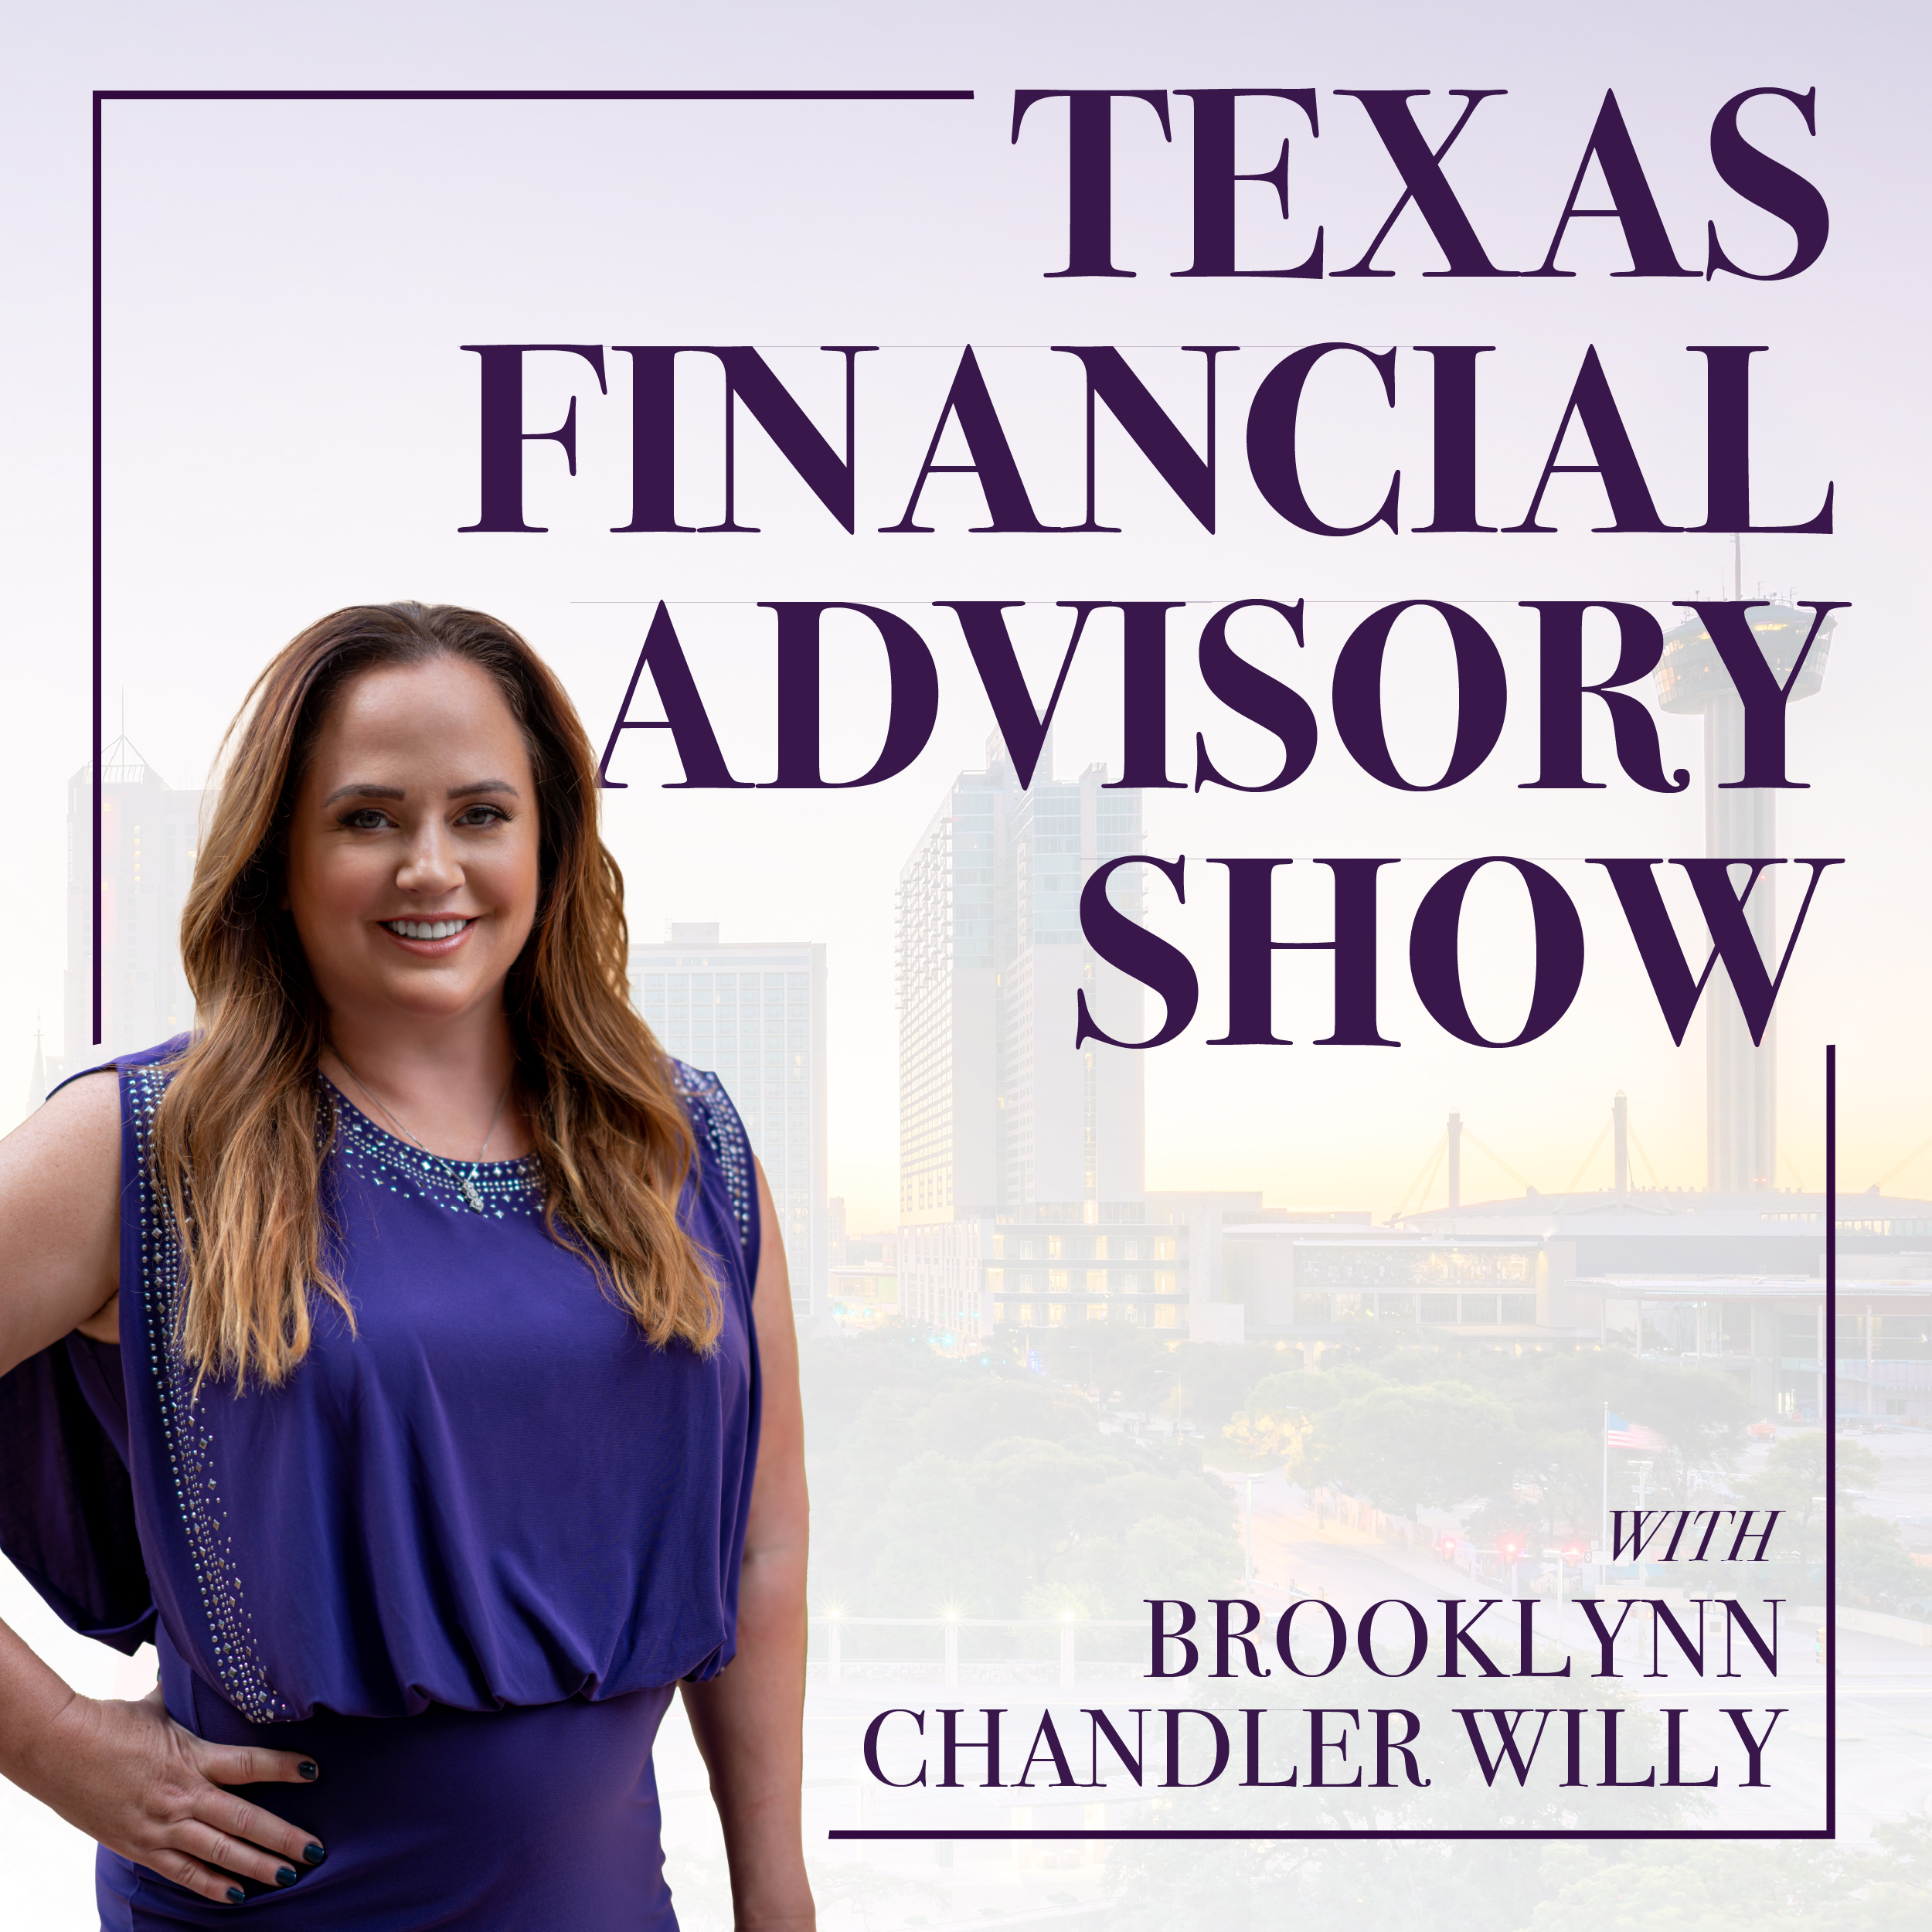 The Texas Financial Advisory Radio Show with Brooklynn Chandler Willy